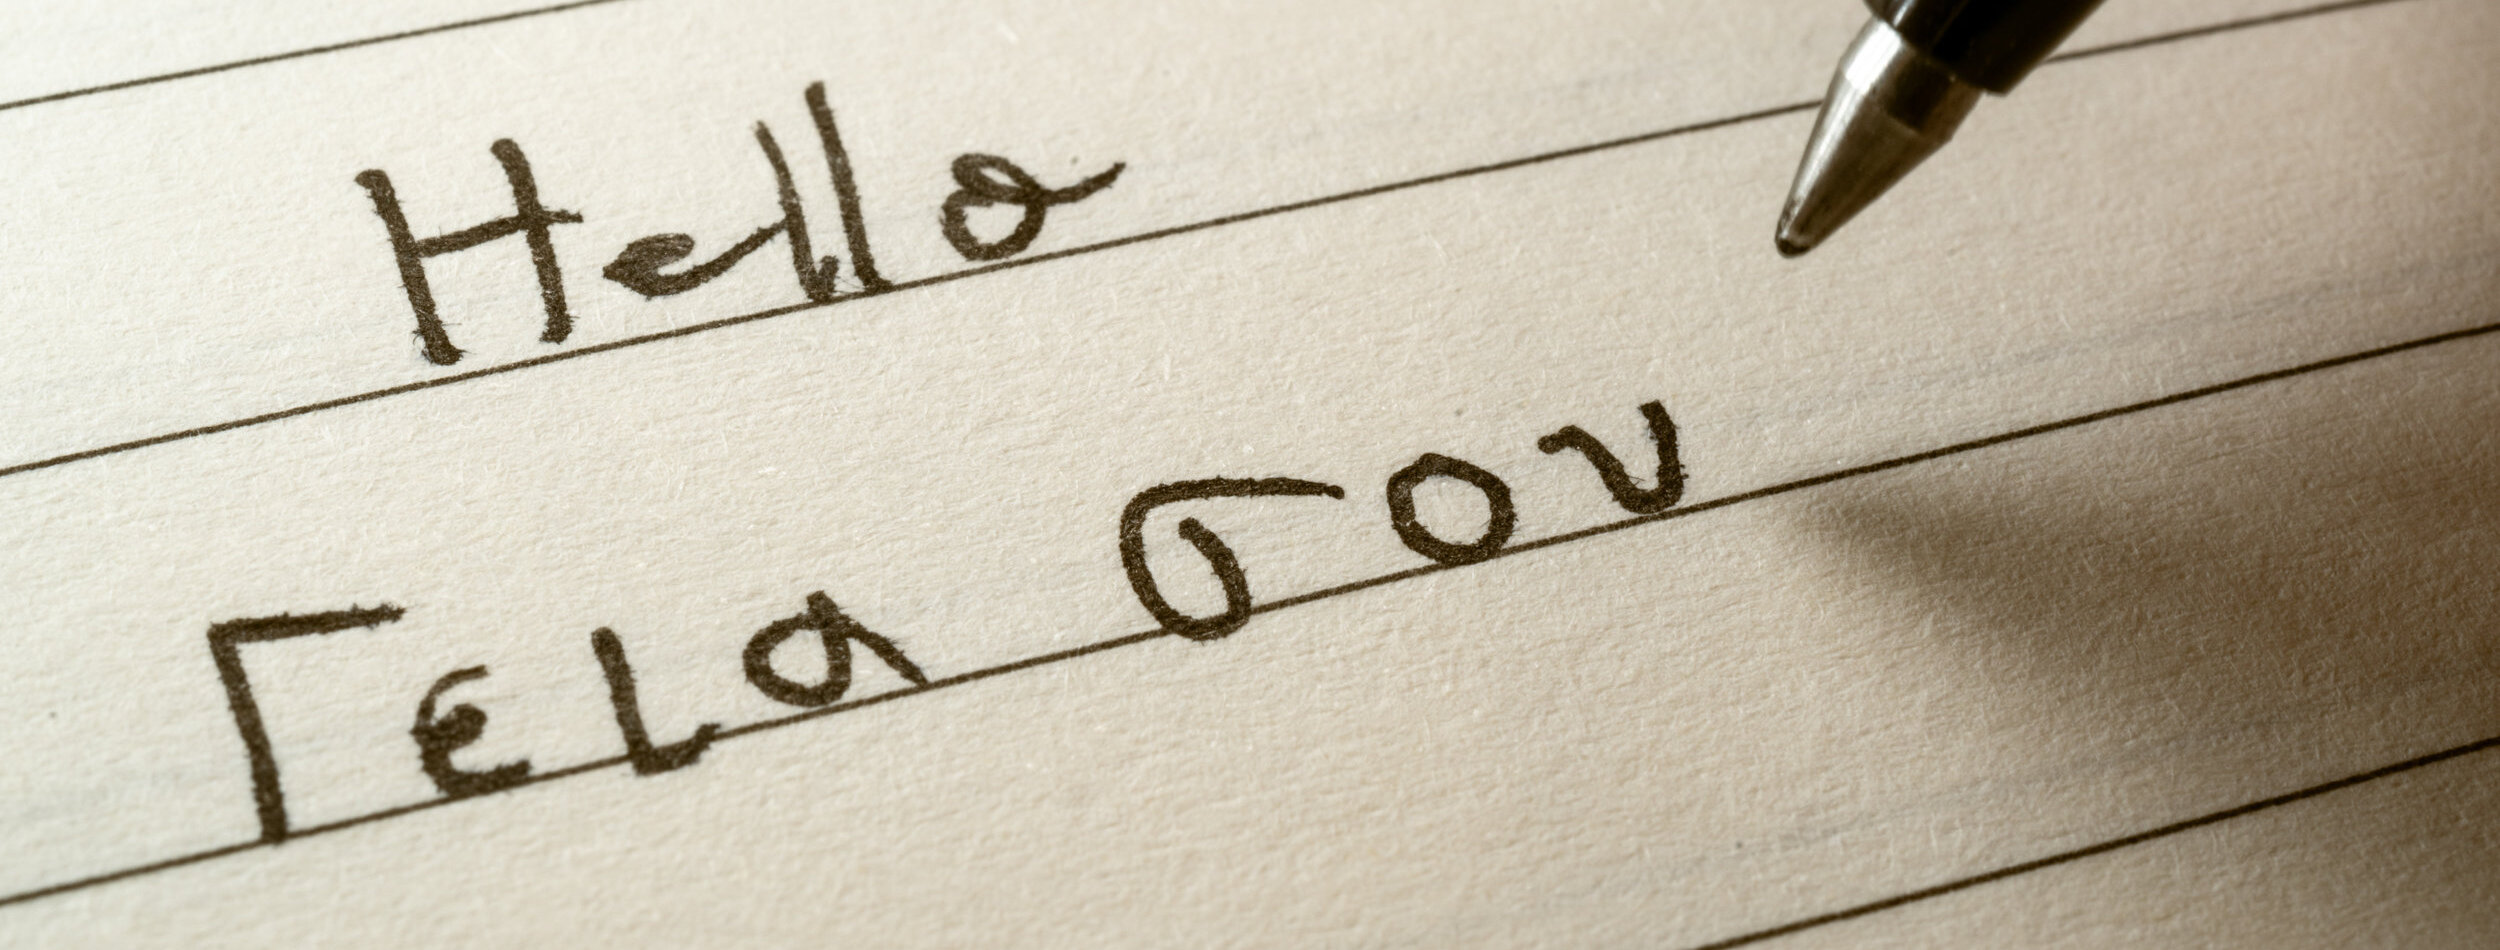 Beginner Greek language learner writing Hello word in greek alphabet on a notebook close-up shot